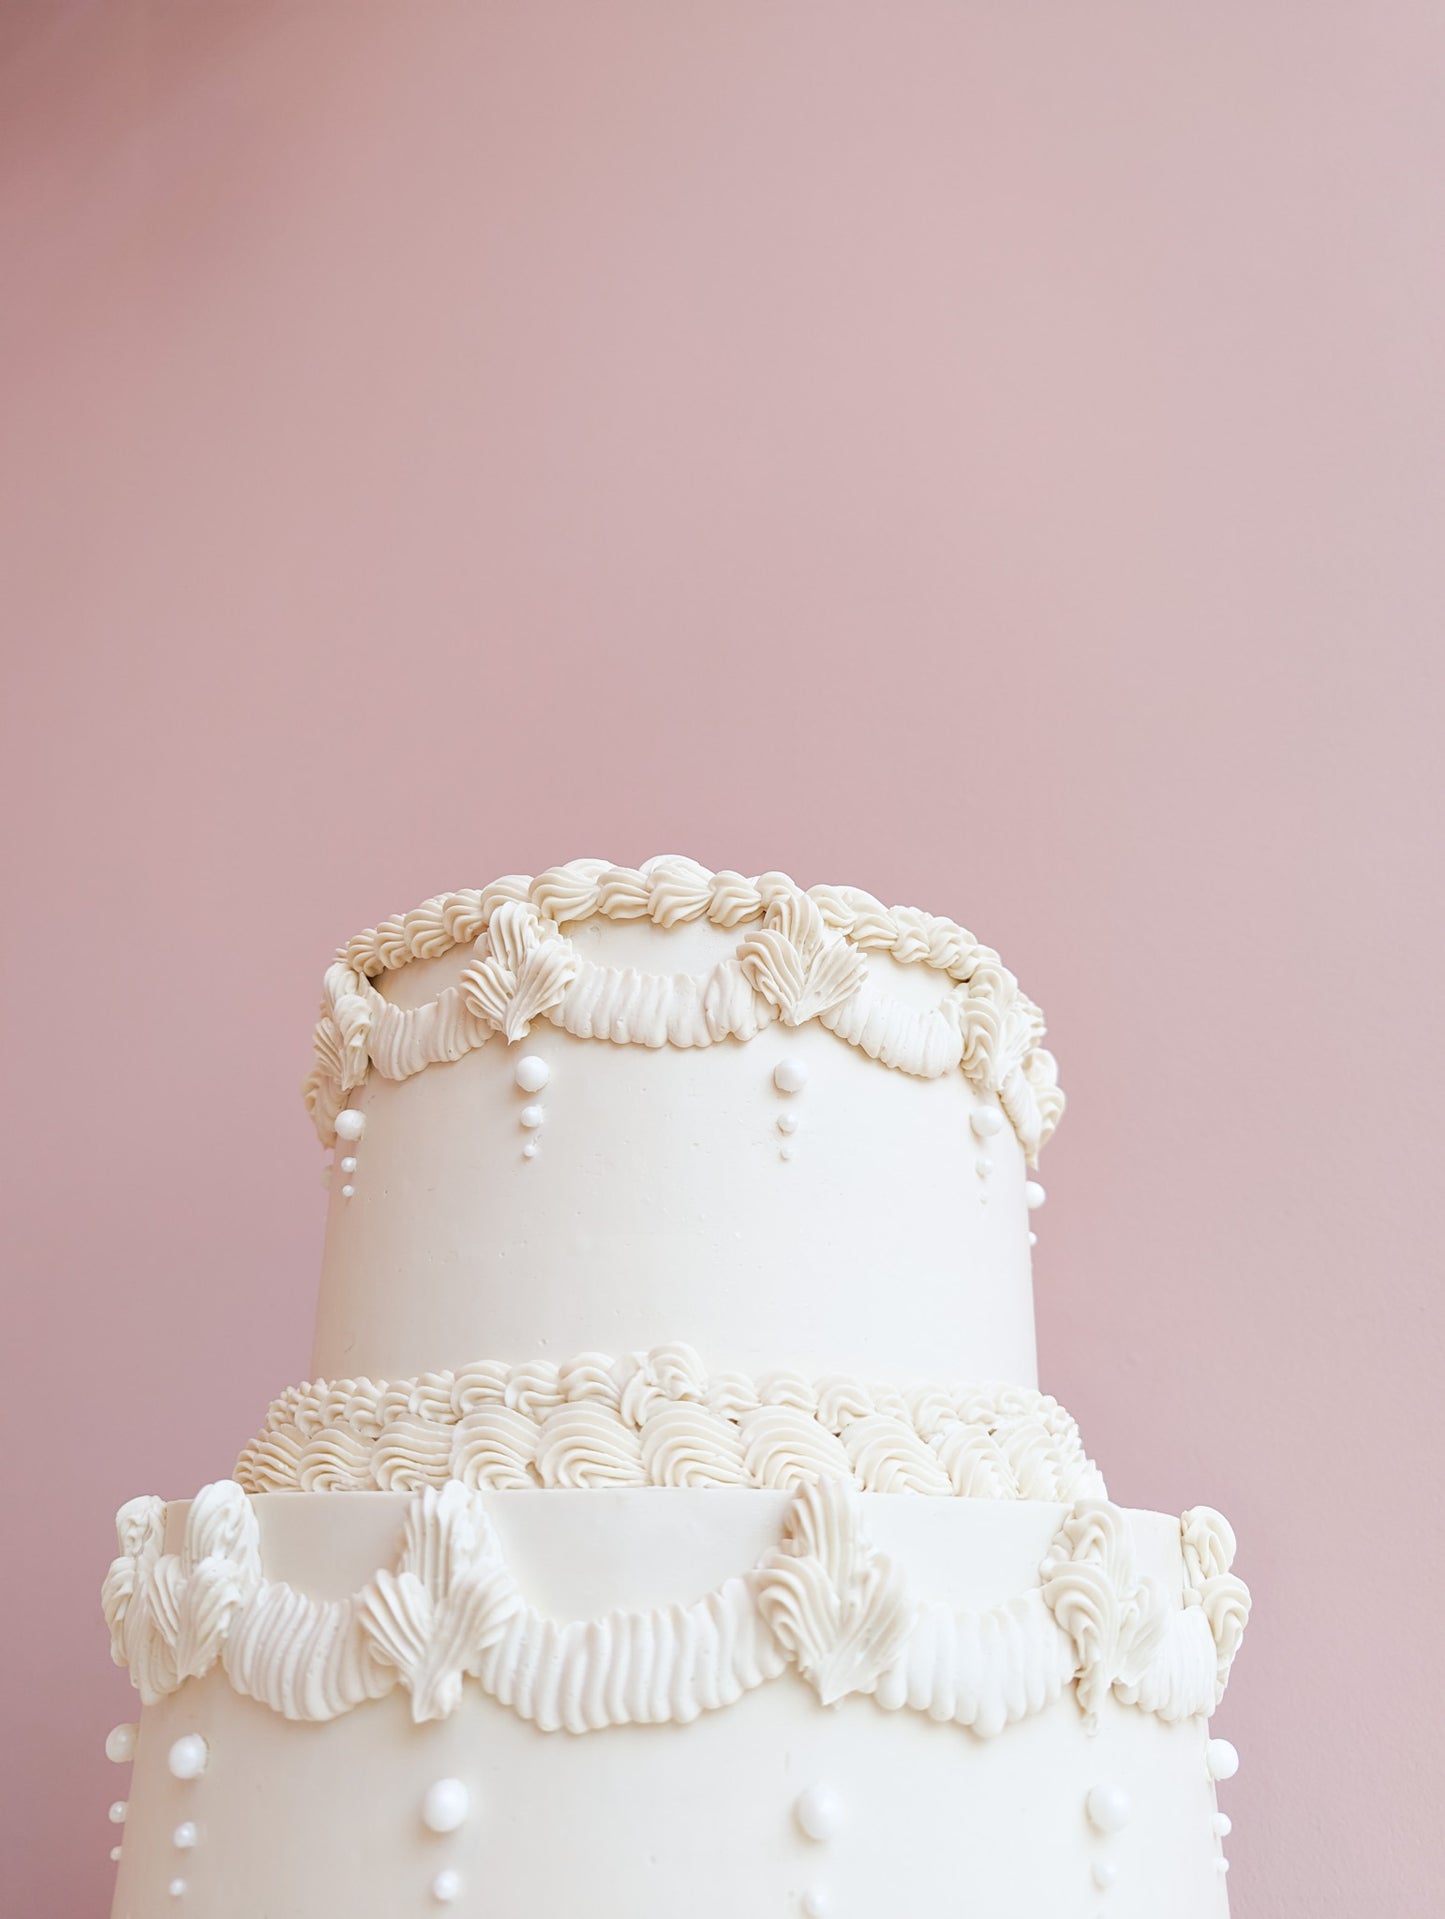 White tiered vintage cake with massive cream decor